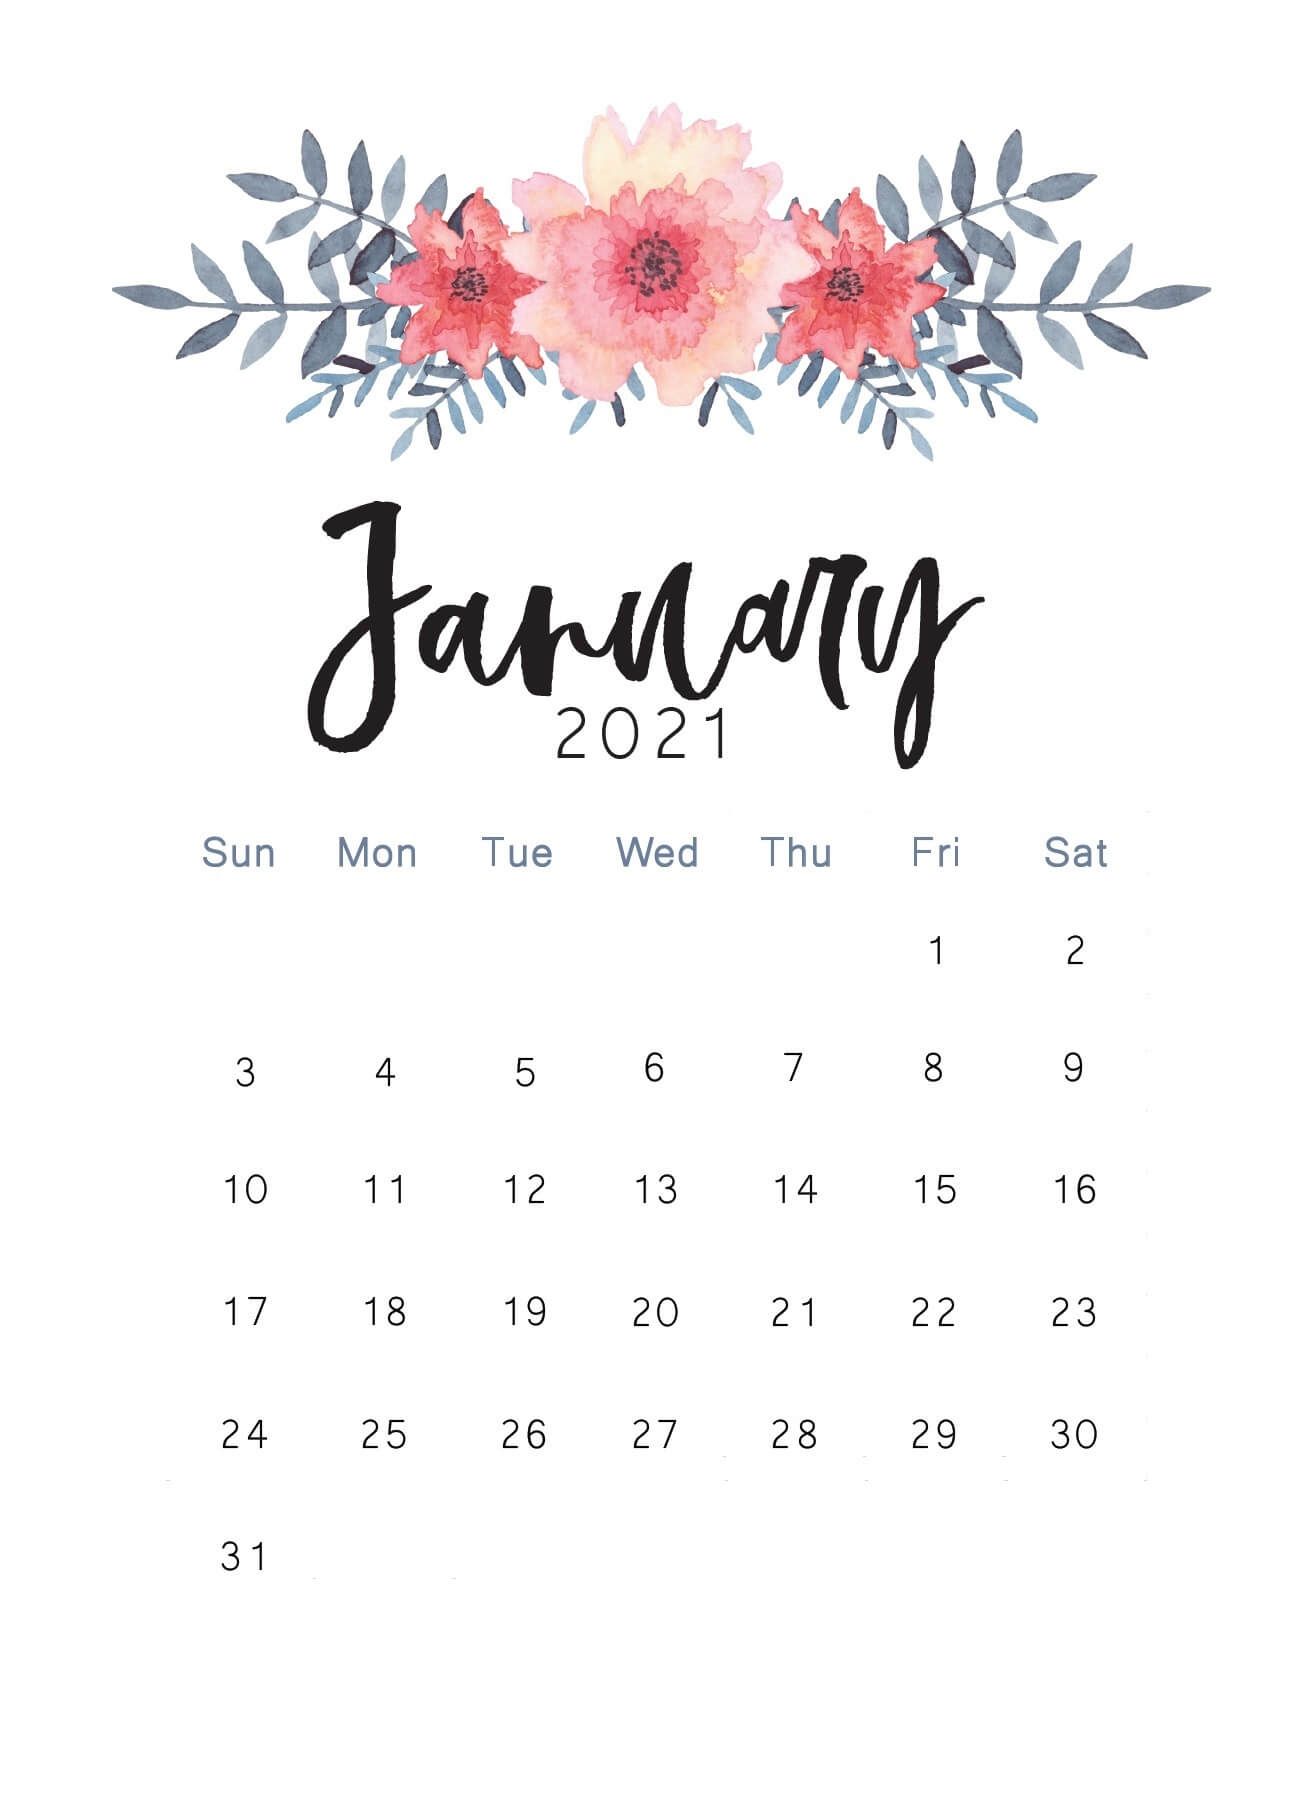 January 2021 Calendar Wallpaper Phone Image ID 4